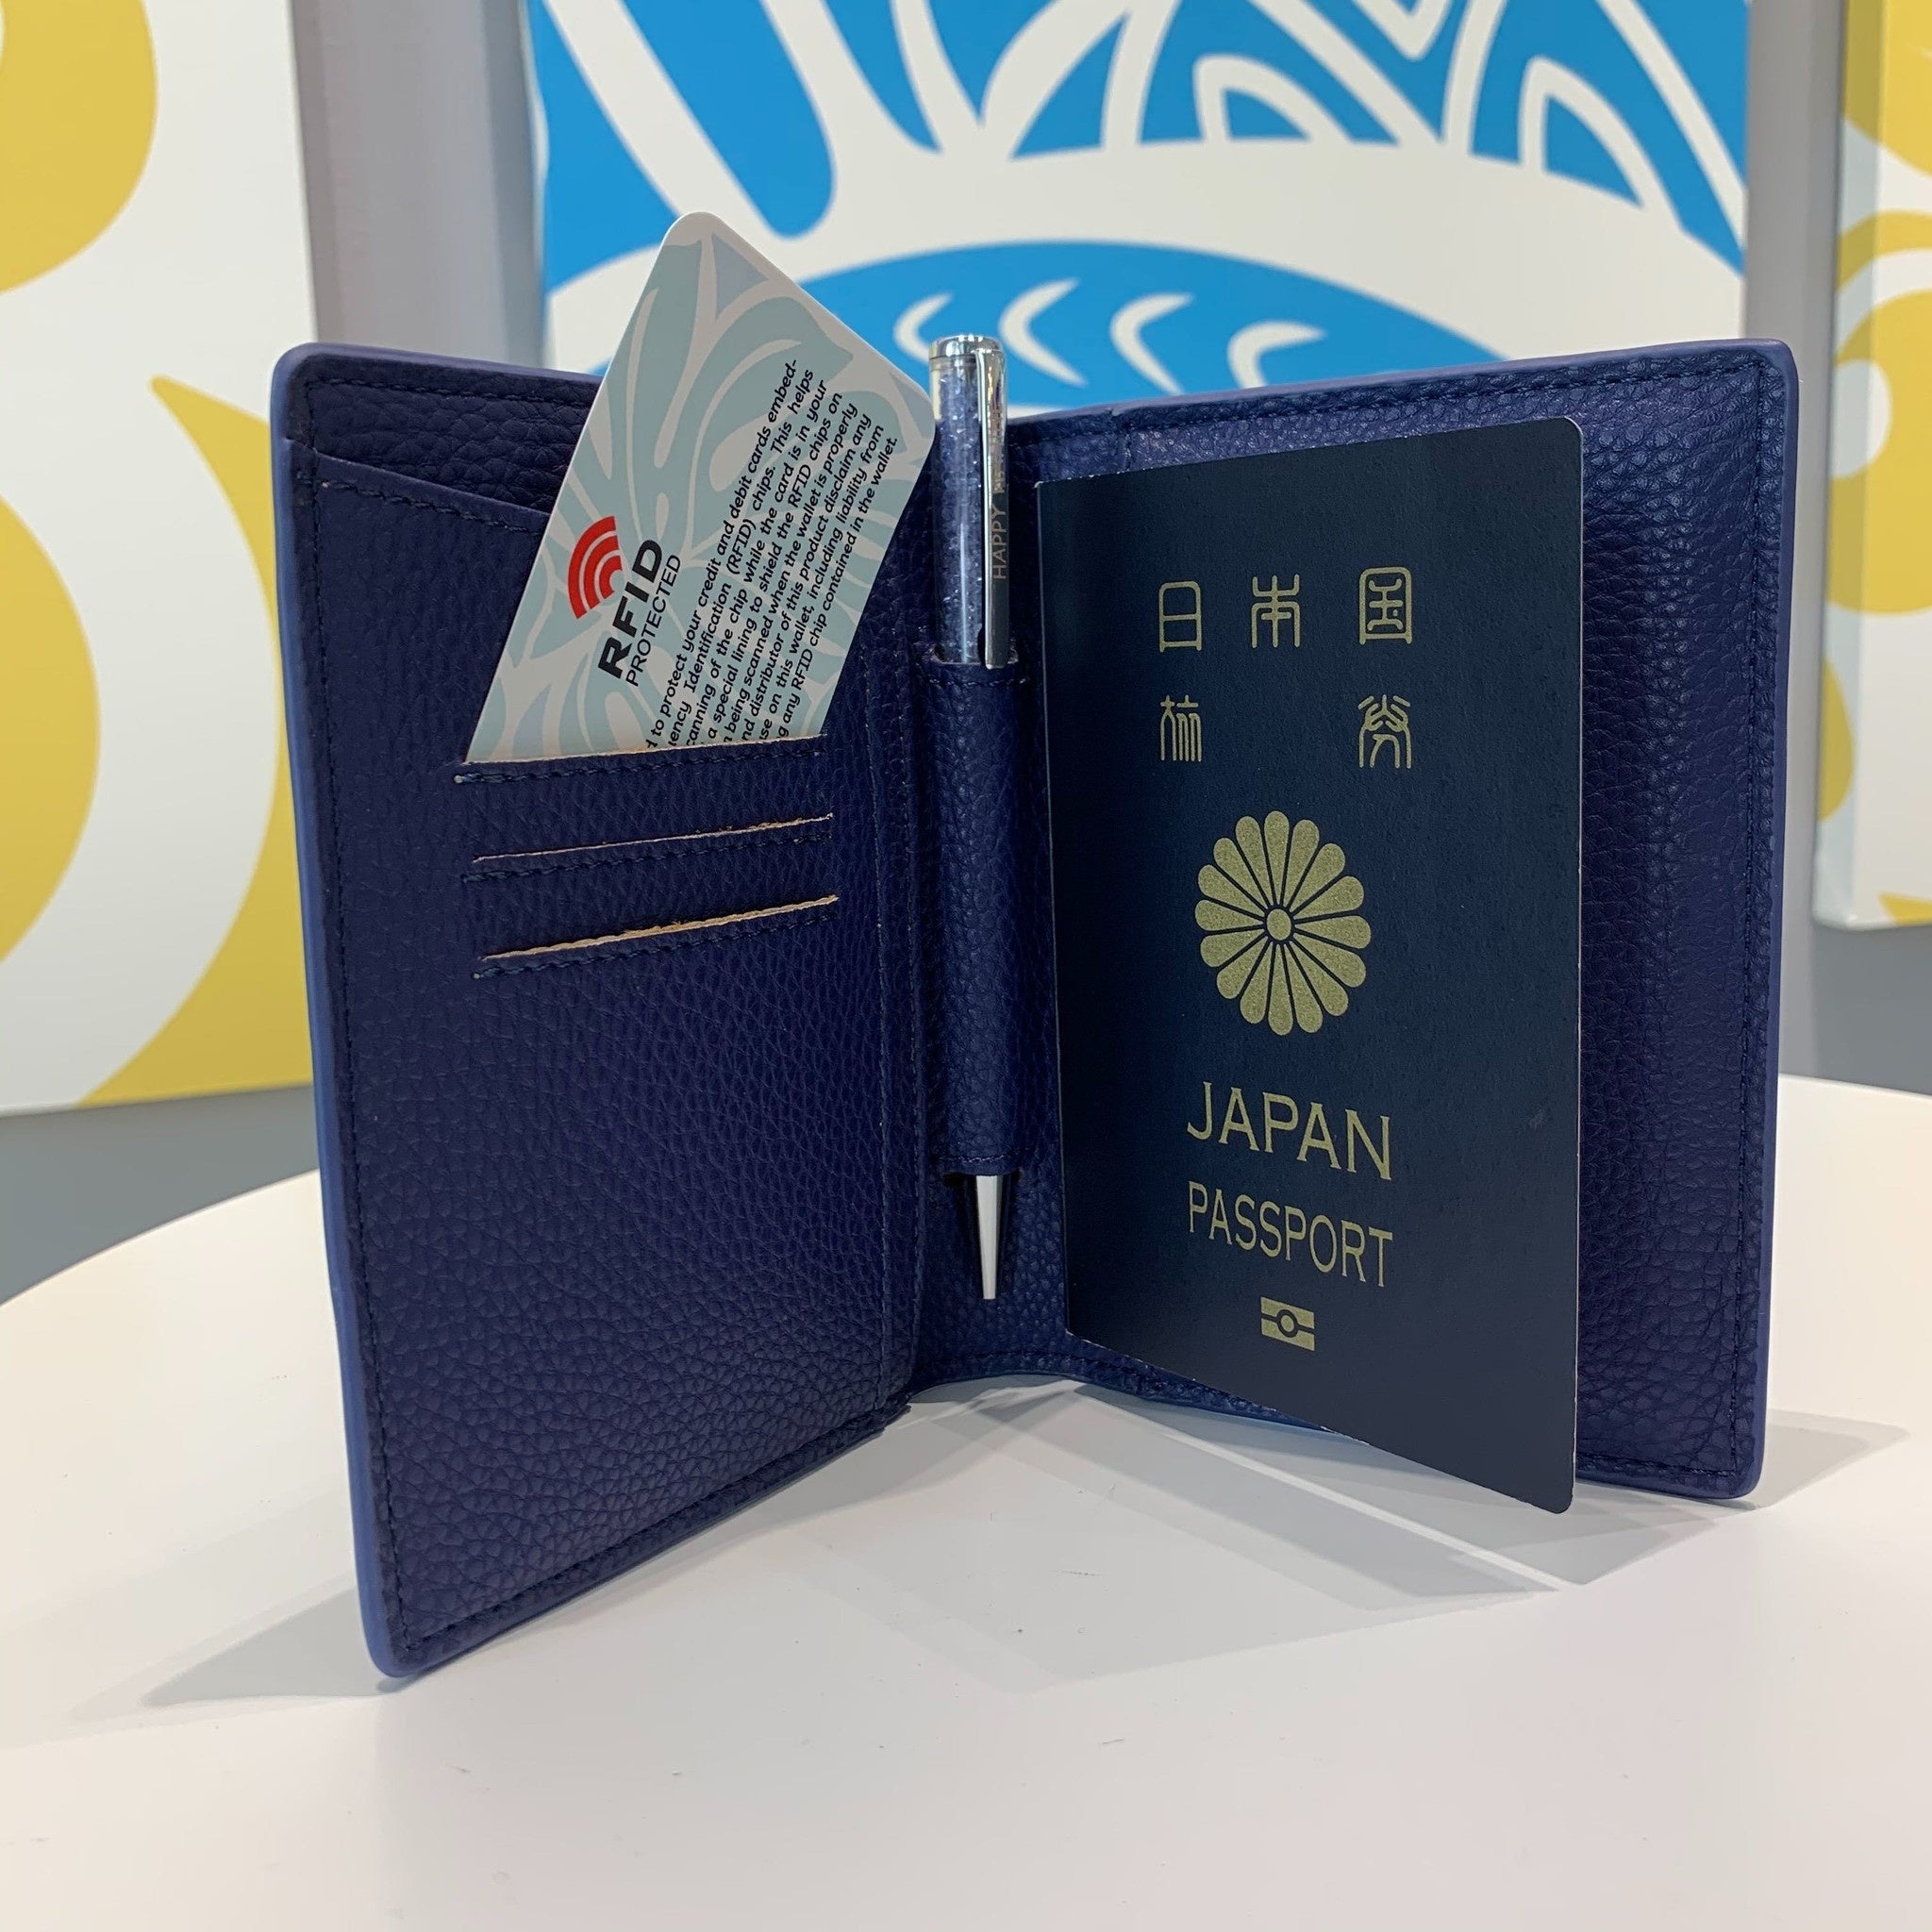 Passport & Travel Cases